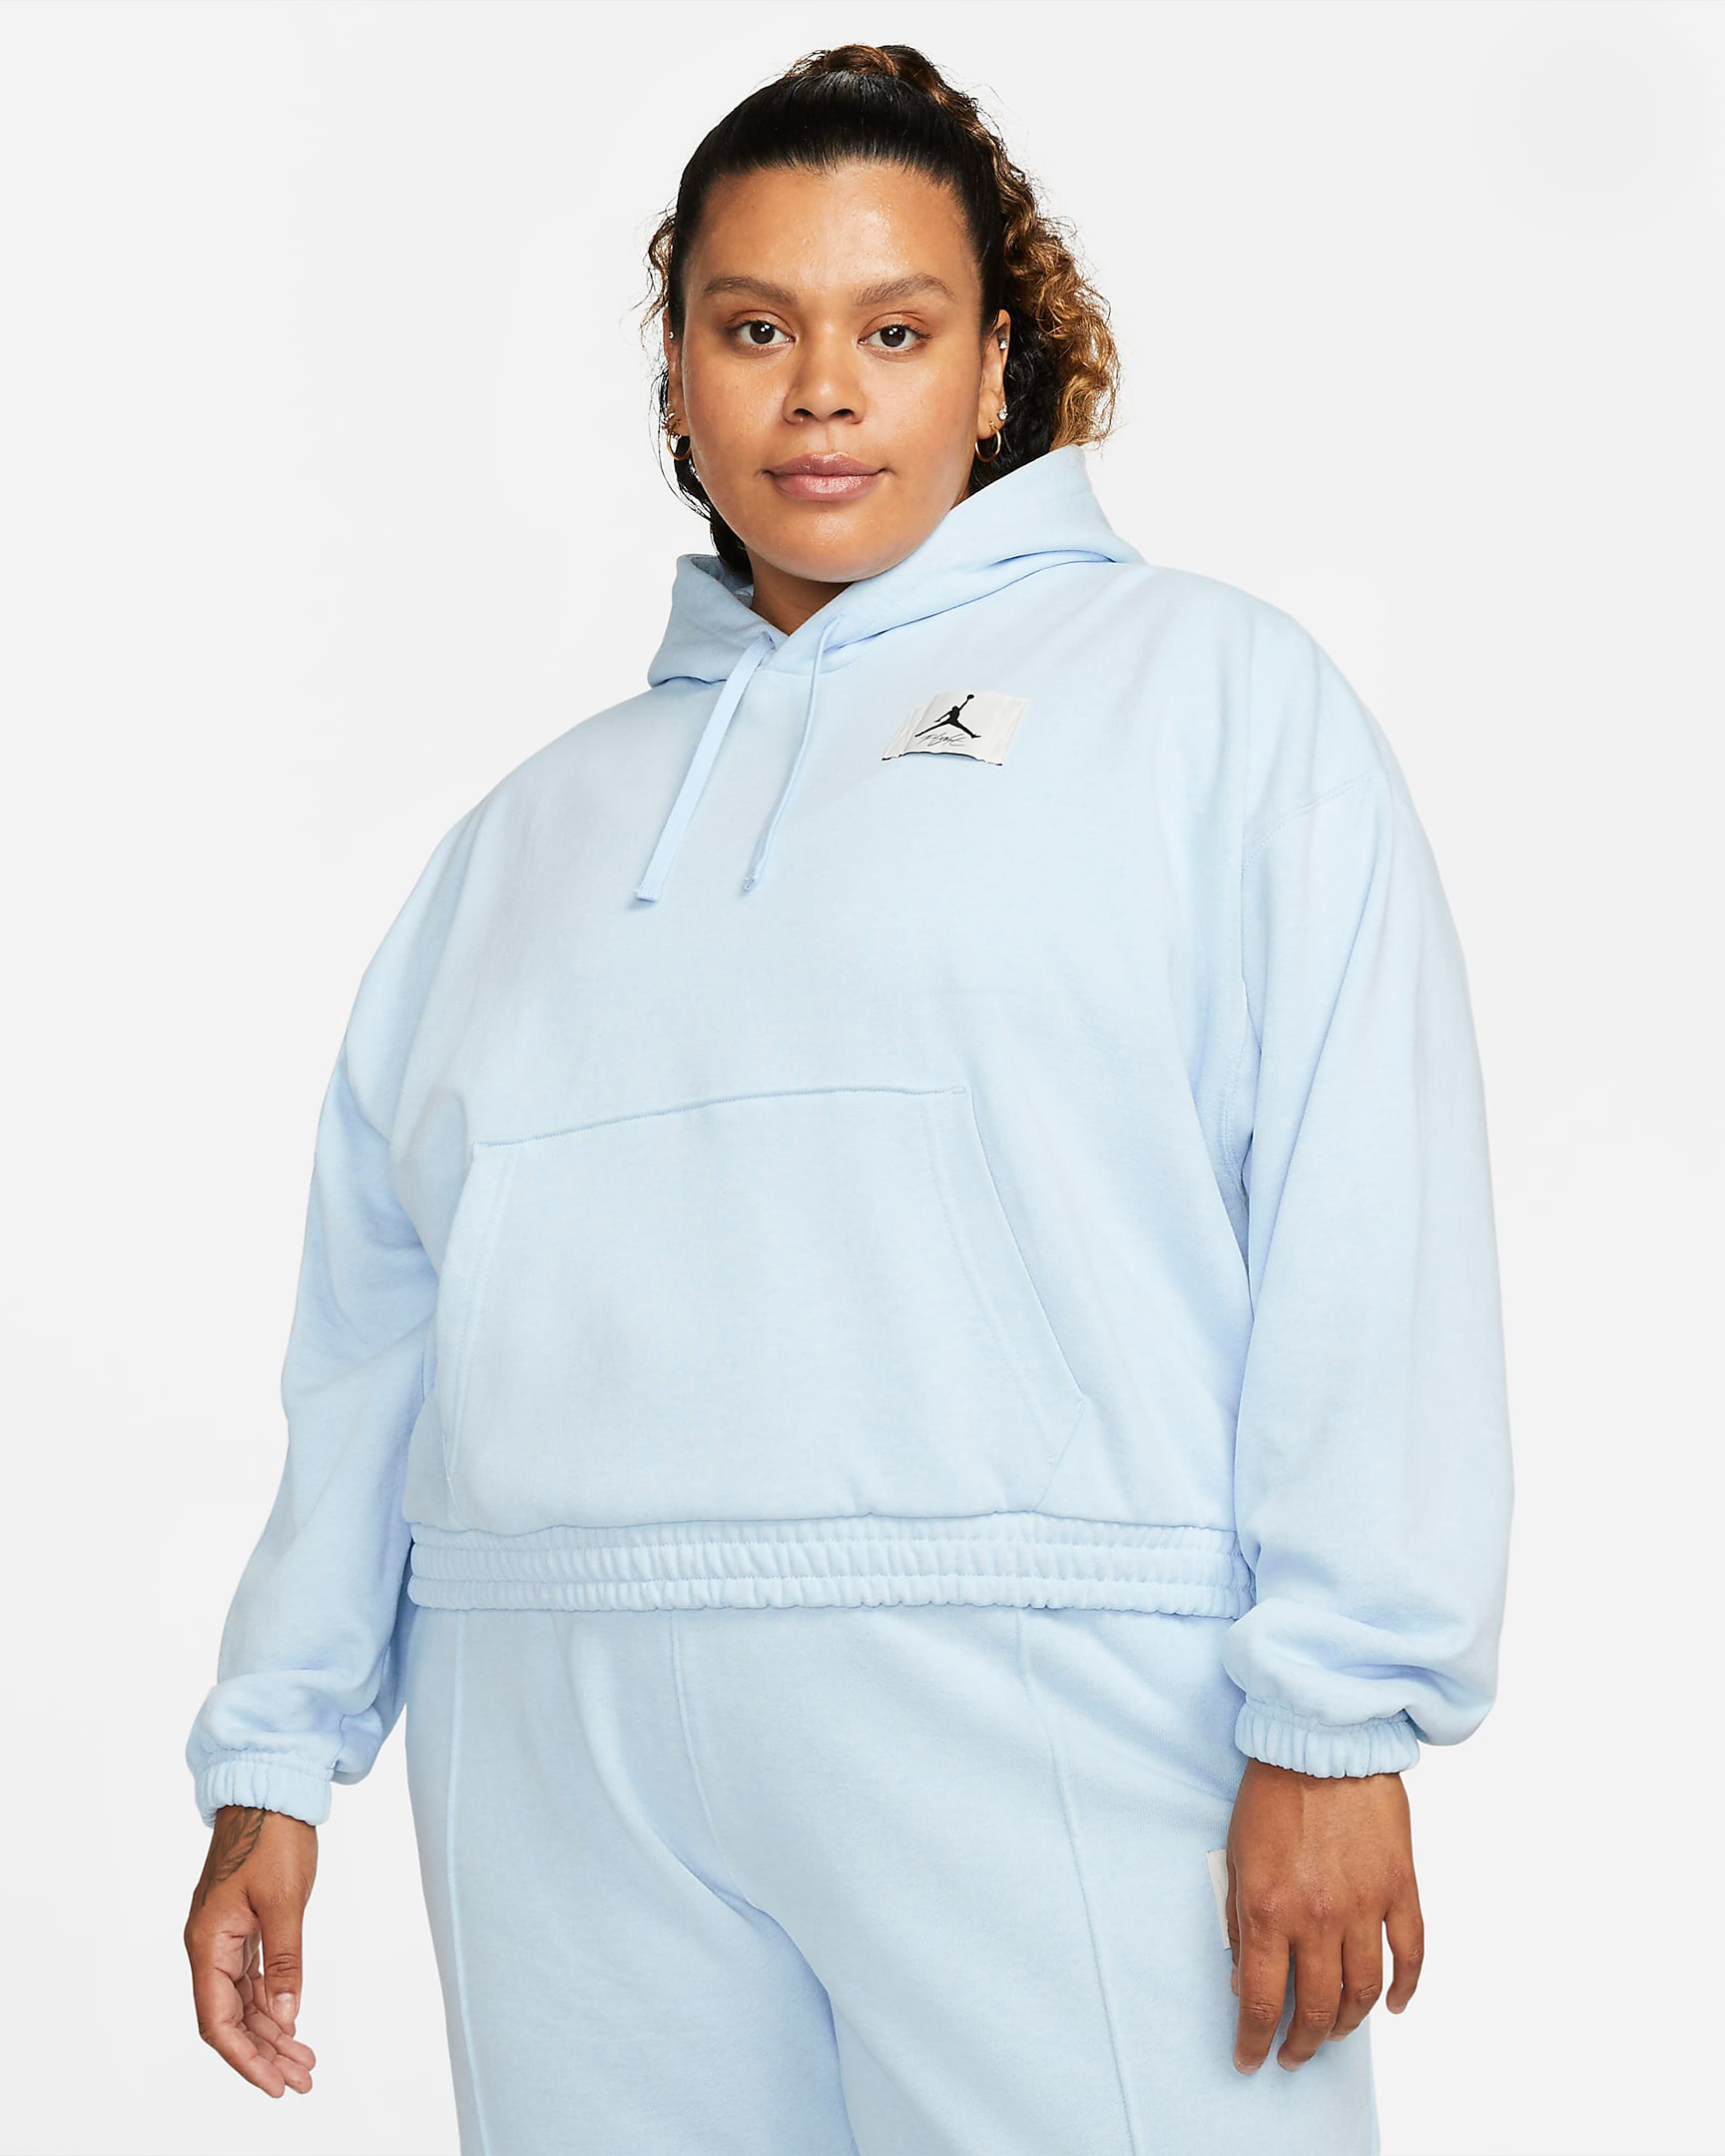 jordan-5-bluebird-womens-plus-size-hoodie-1